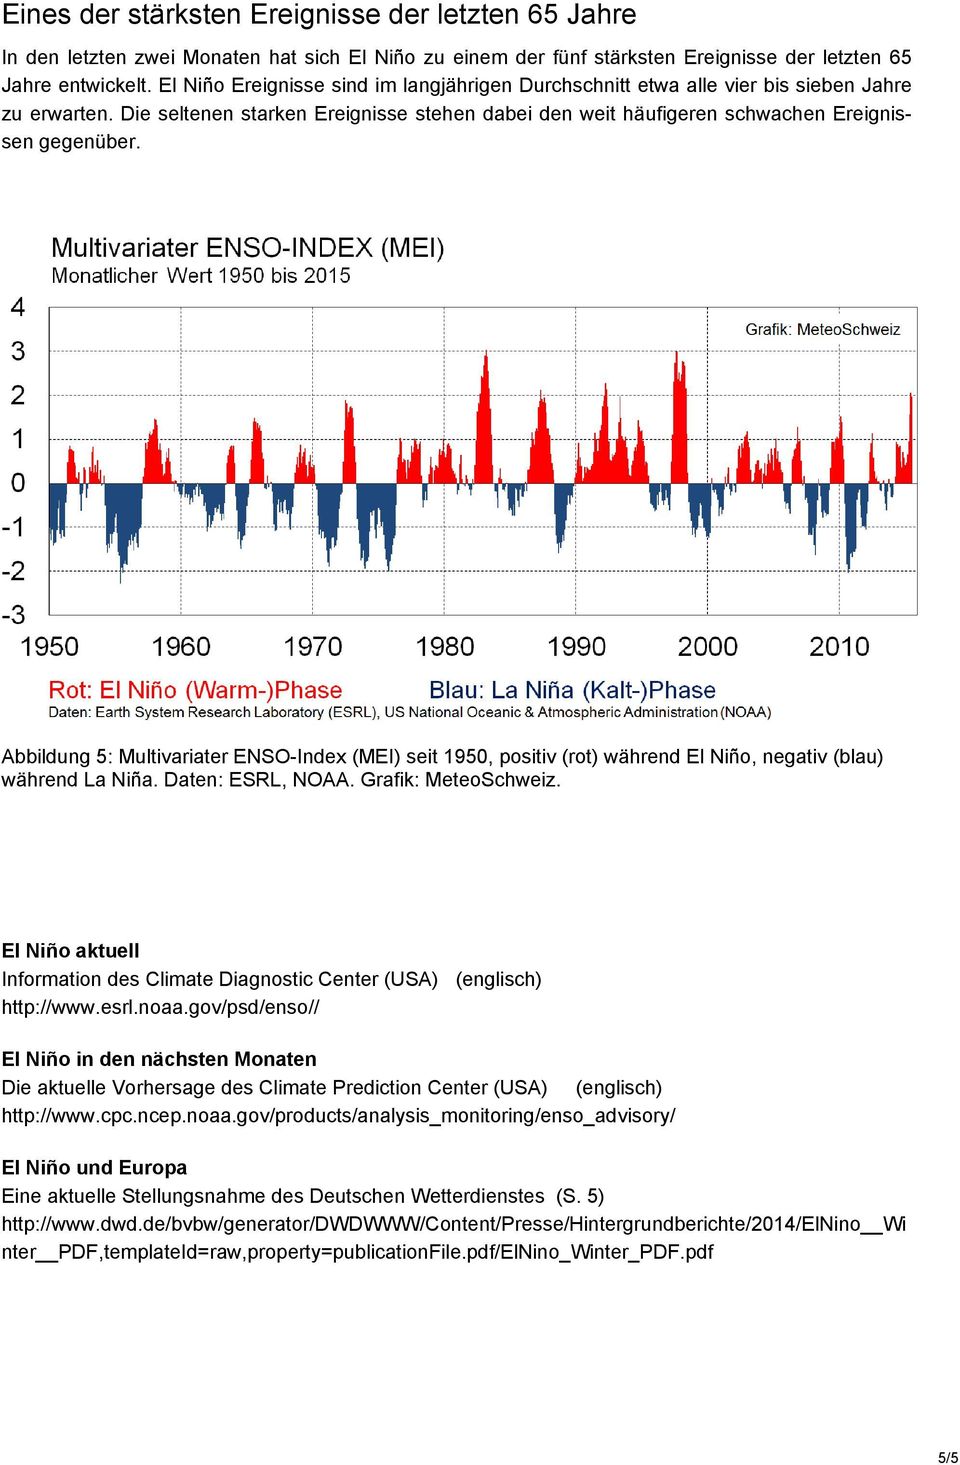 Abbildung 5: Multivariater ENSO-Index (MEI) seit 1950, positiv (rot) während El Niño, negativ (blau) während La Niña. Daten: ESRL, NOAA. Grafik: MeteoSchweiz.